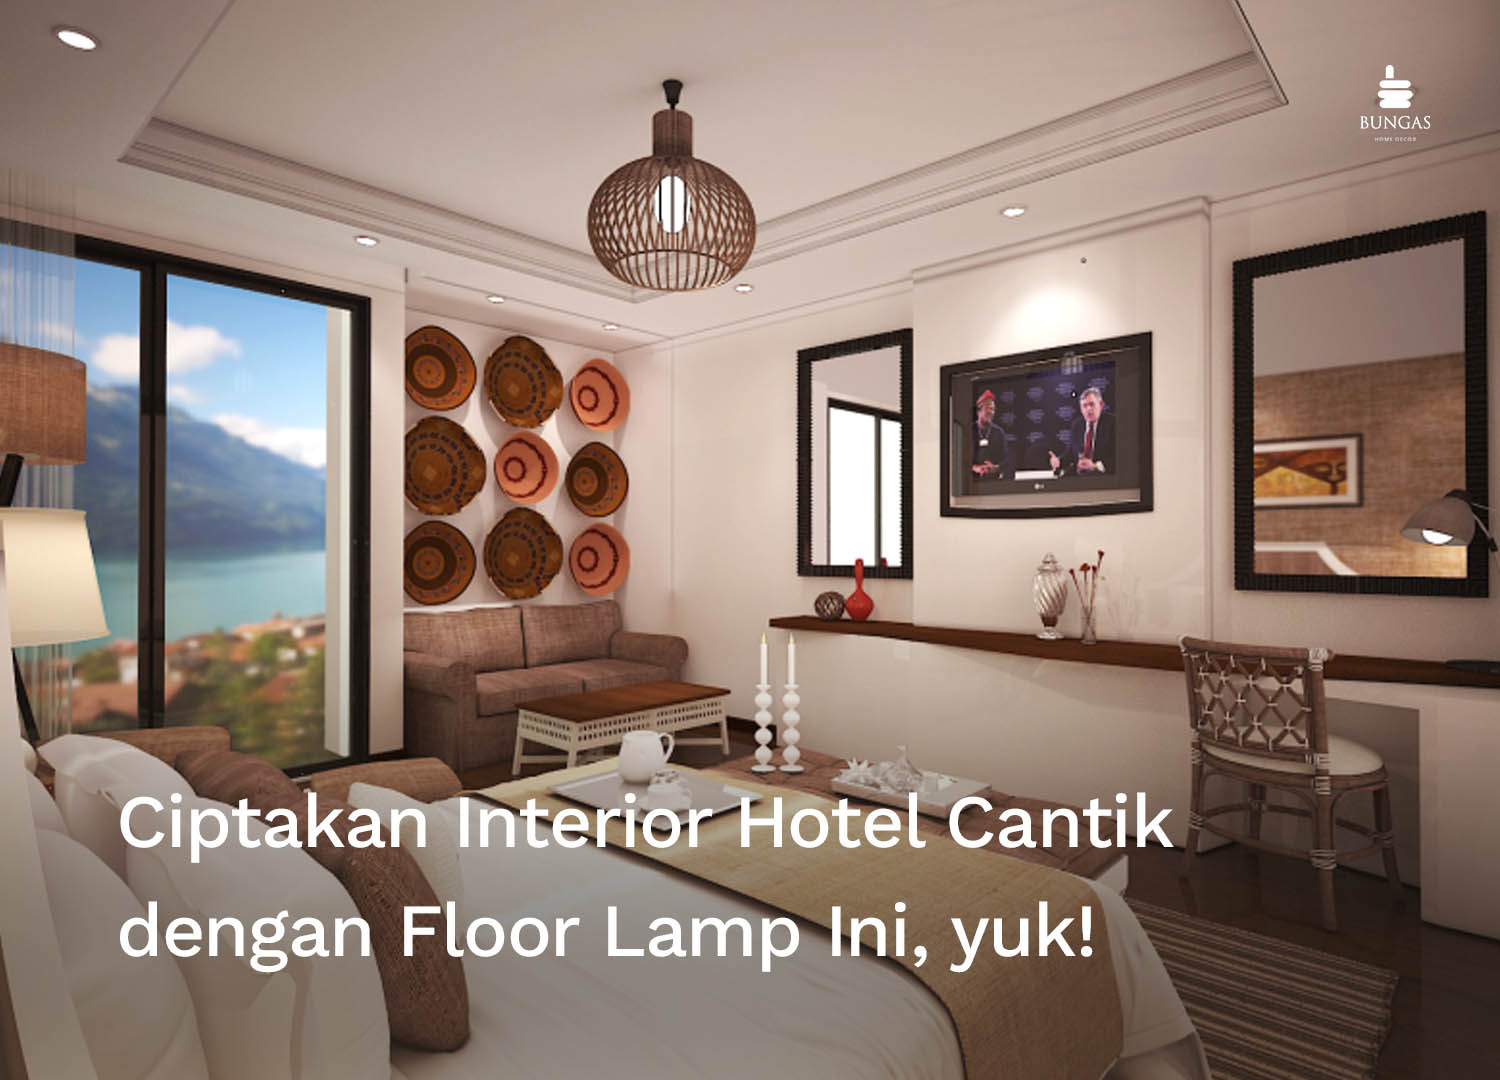 Read more about the article Ciptakan Interior Hotel Cantik dengan Floor Lamp Ini, yuk!